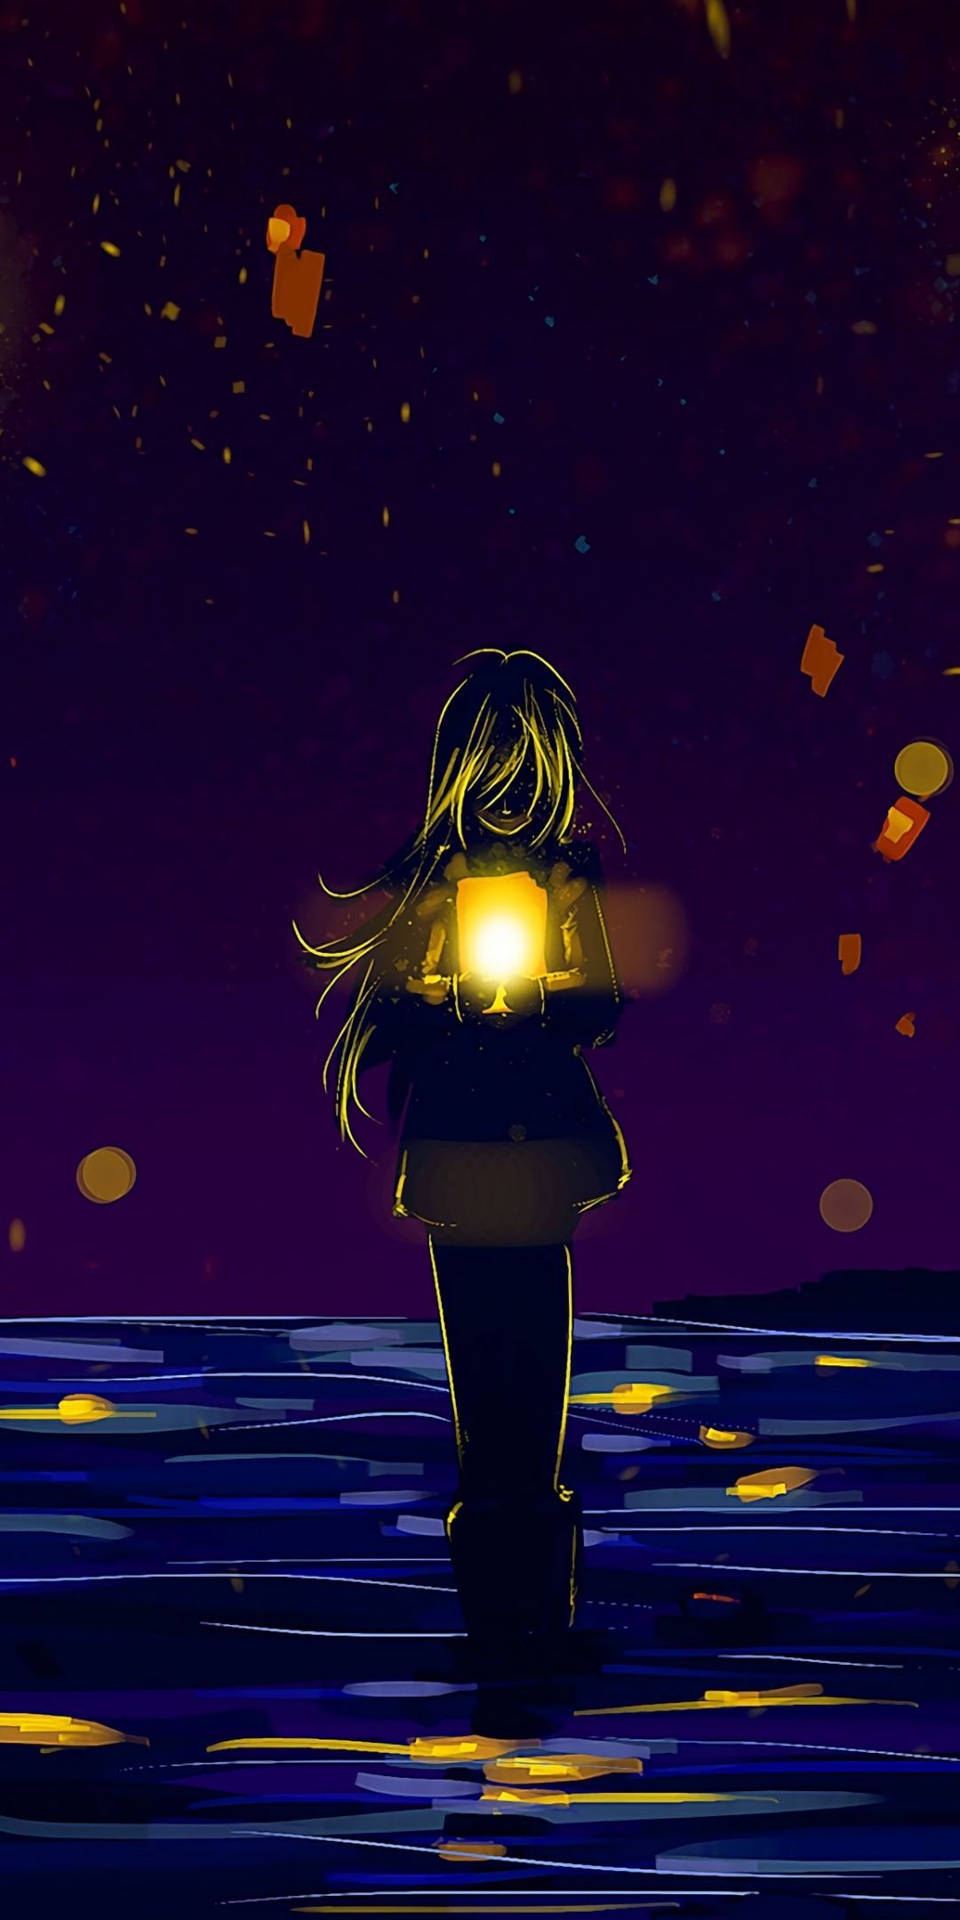 Anime Girl Sad Alone With Lantern